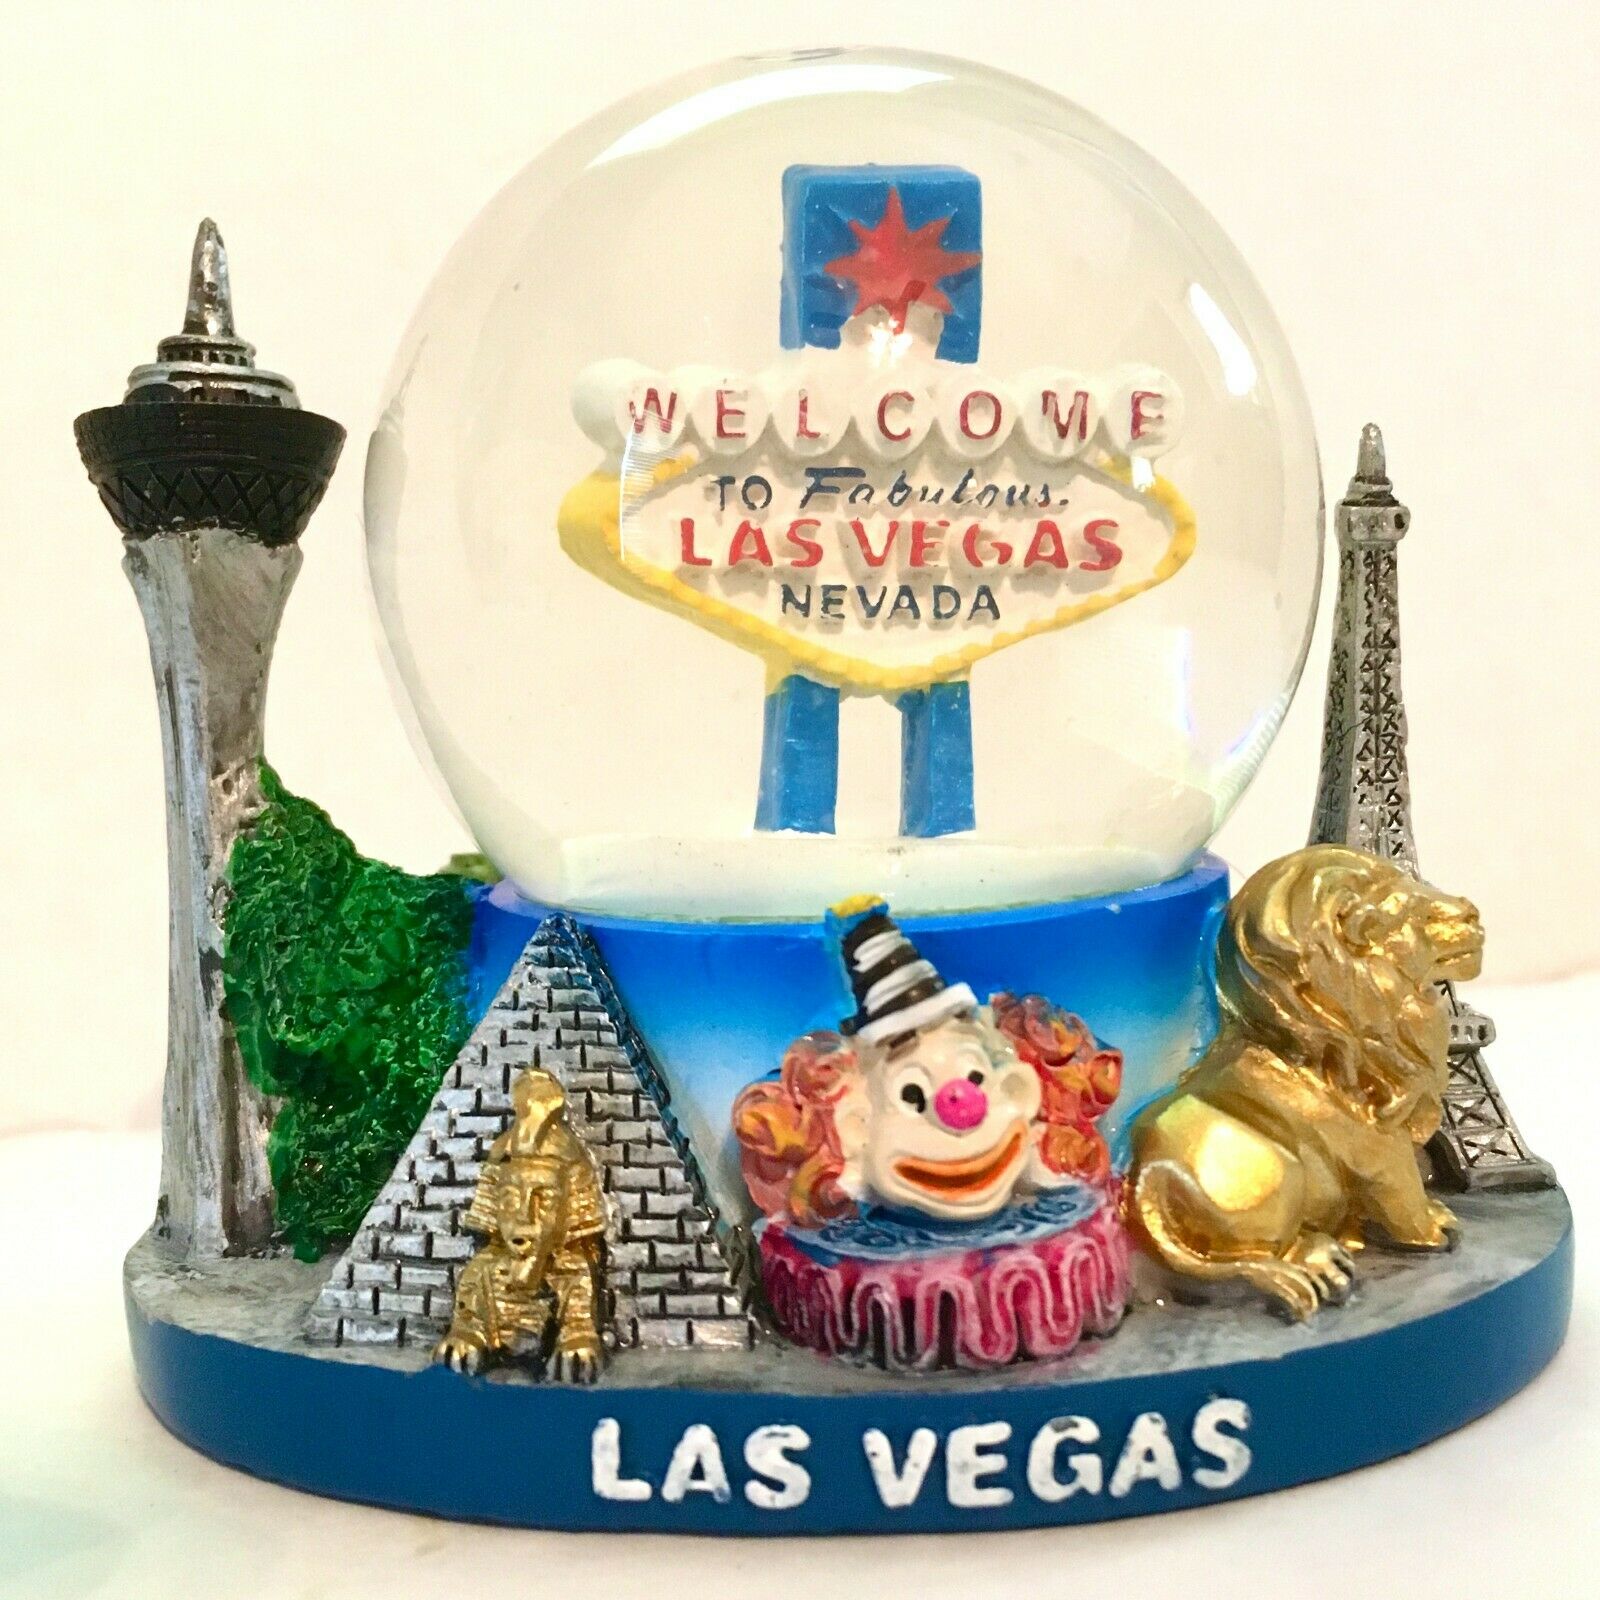 Las Vegas Snow Globe Paperweight Welcome To Fabulous Las Vegas Nevada 3.25" Tall